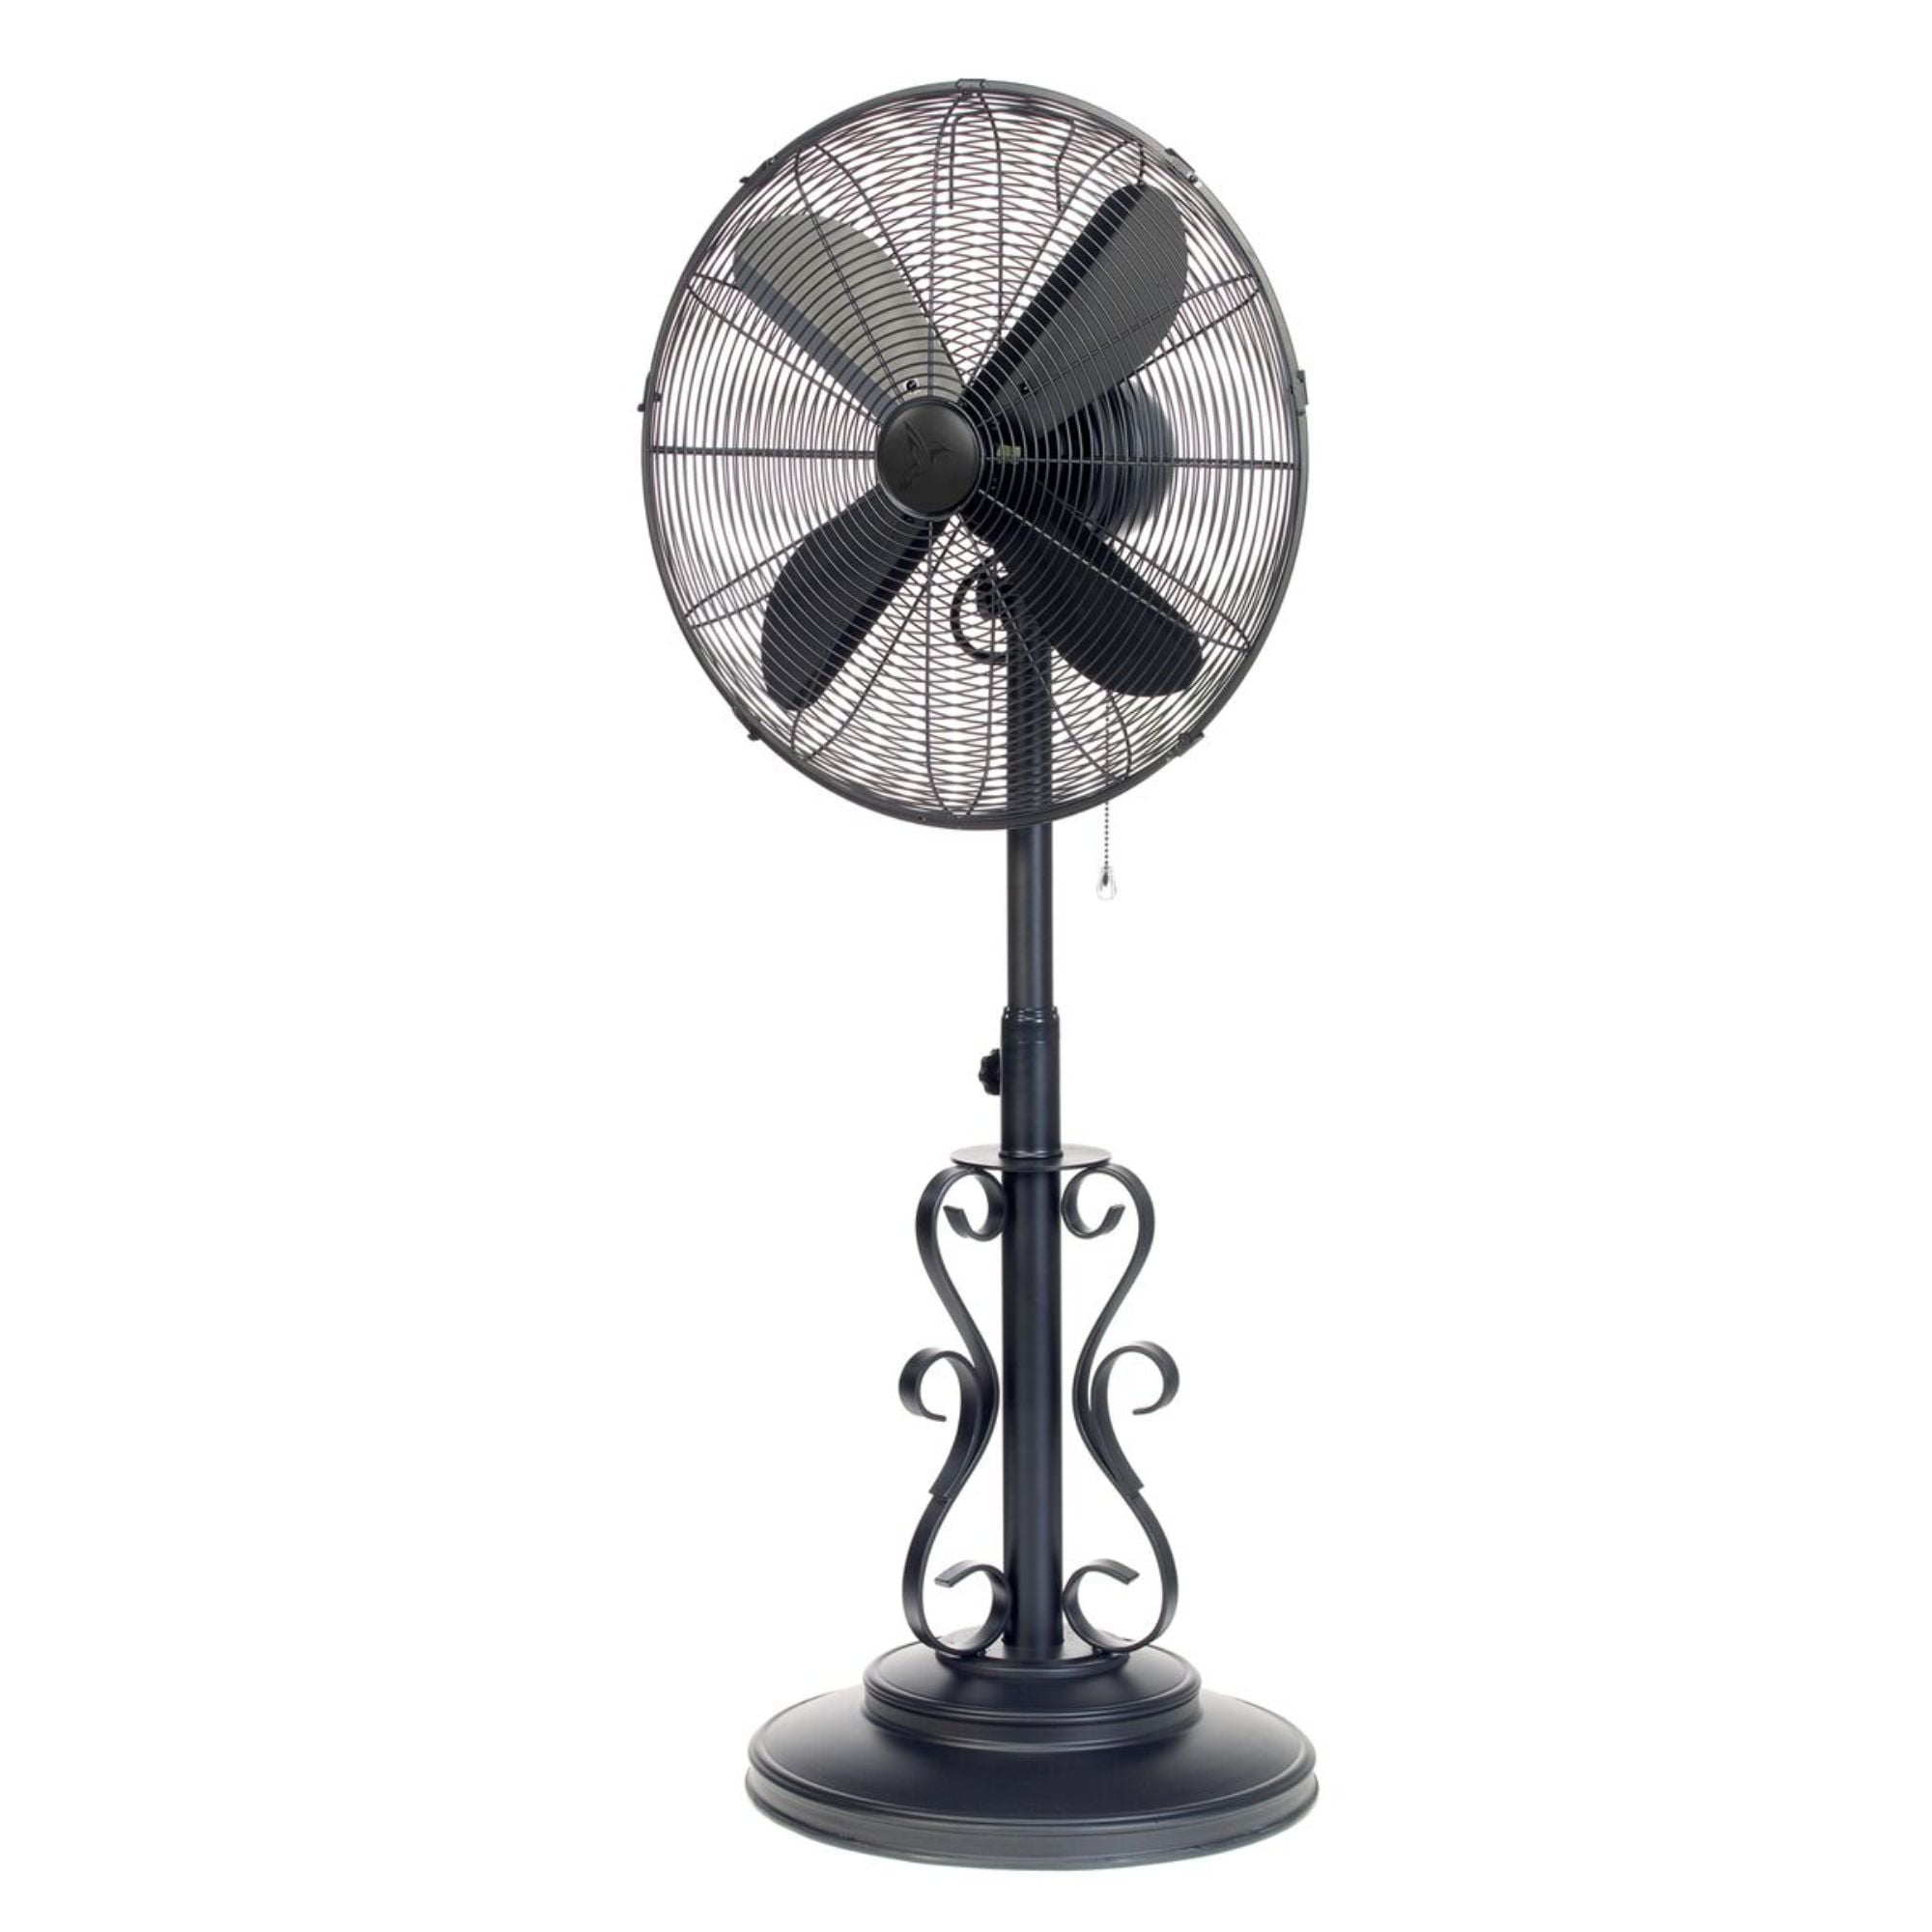 Standing outdoor fan